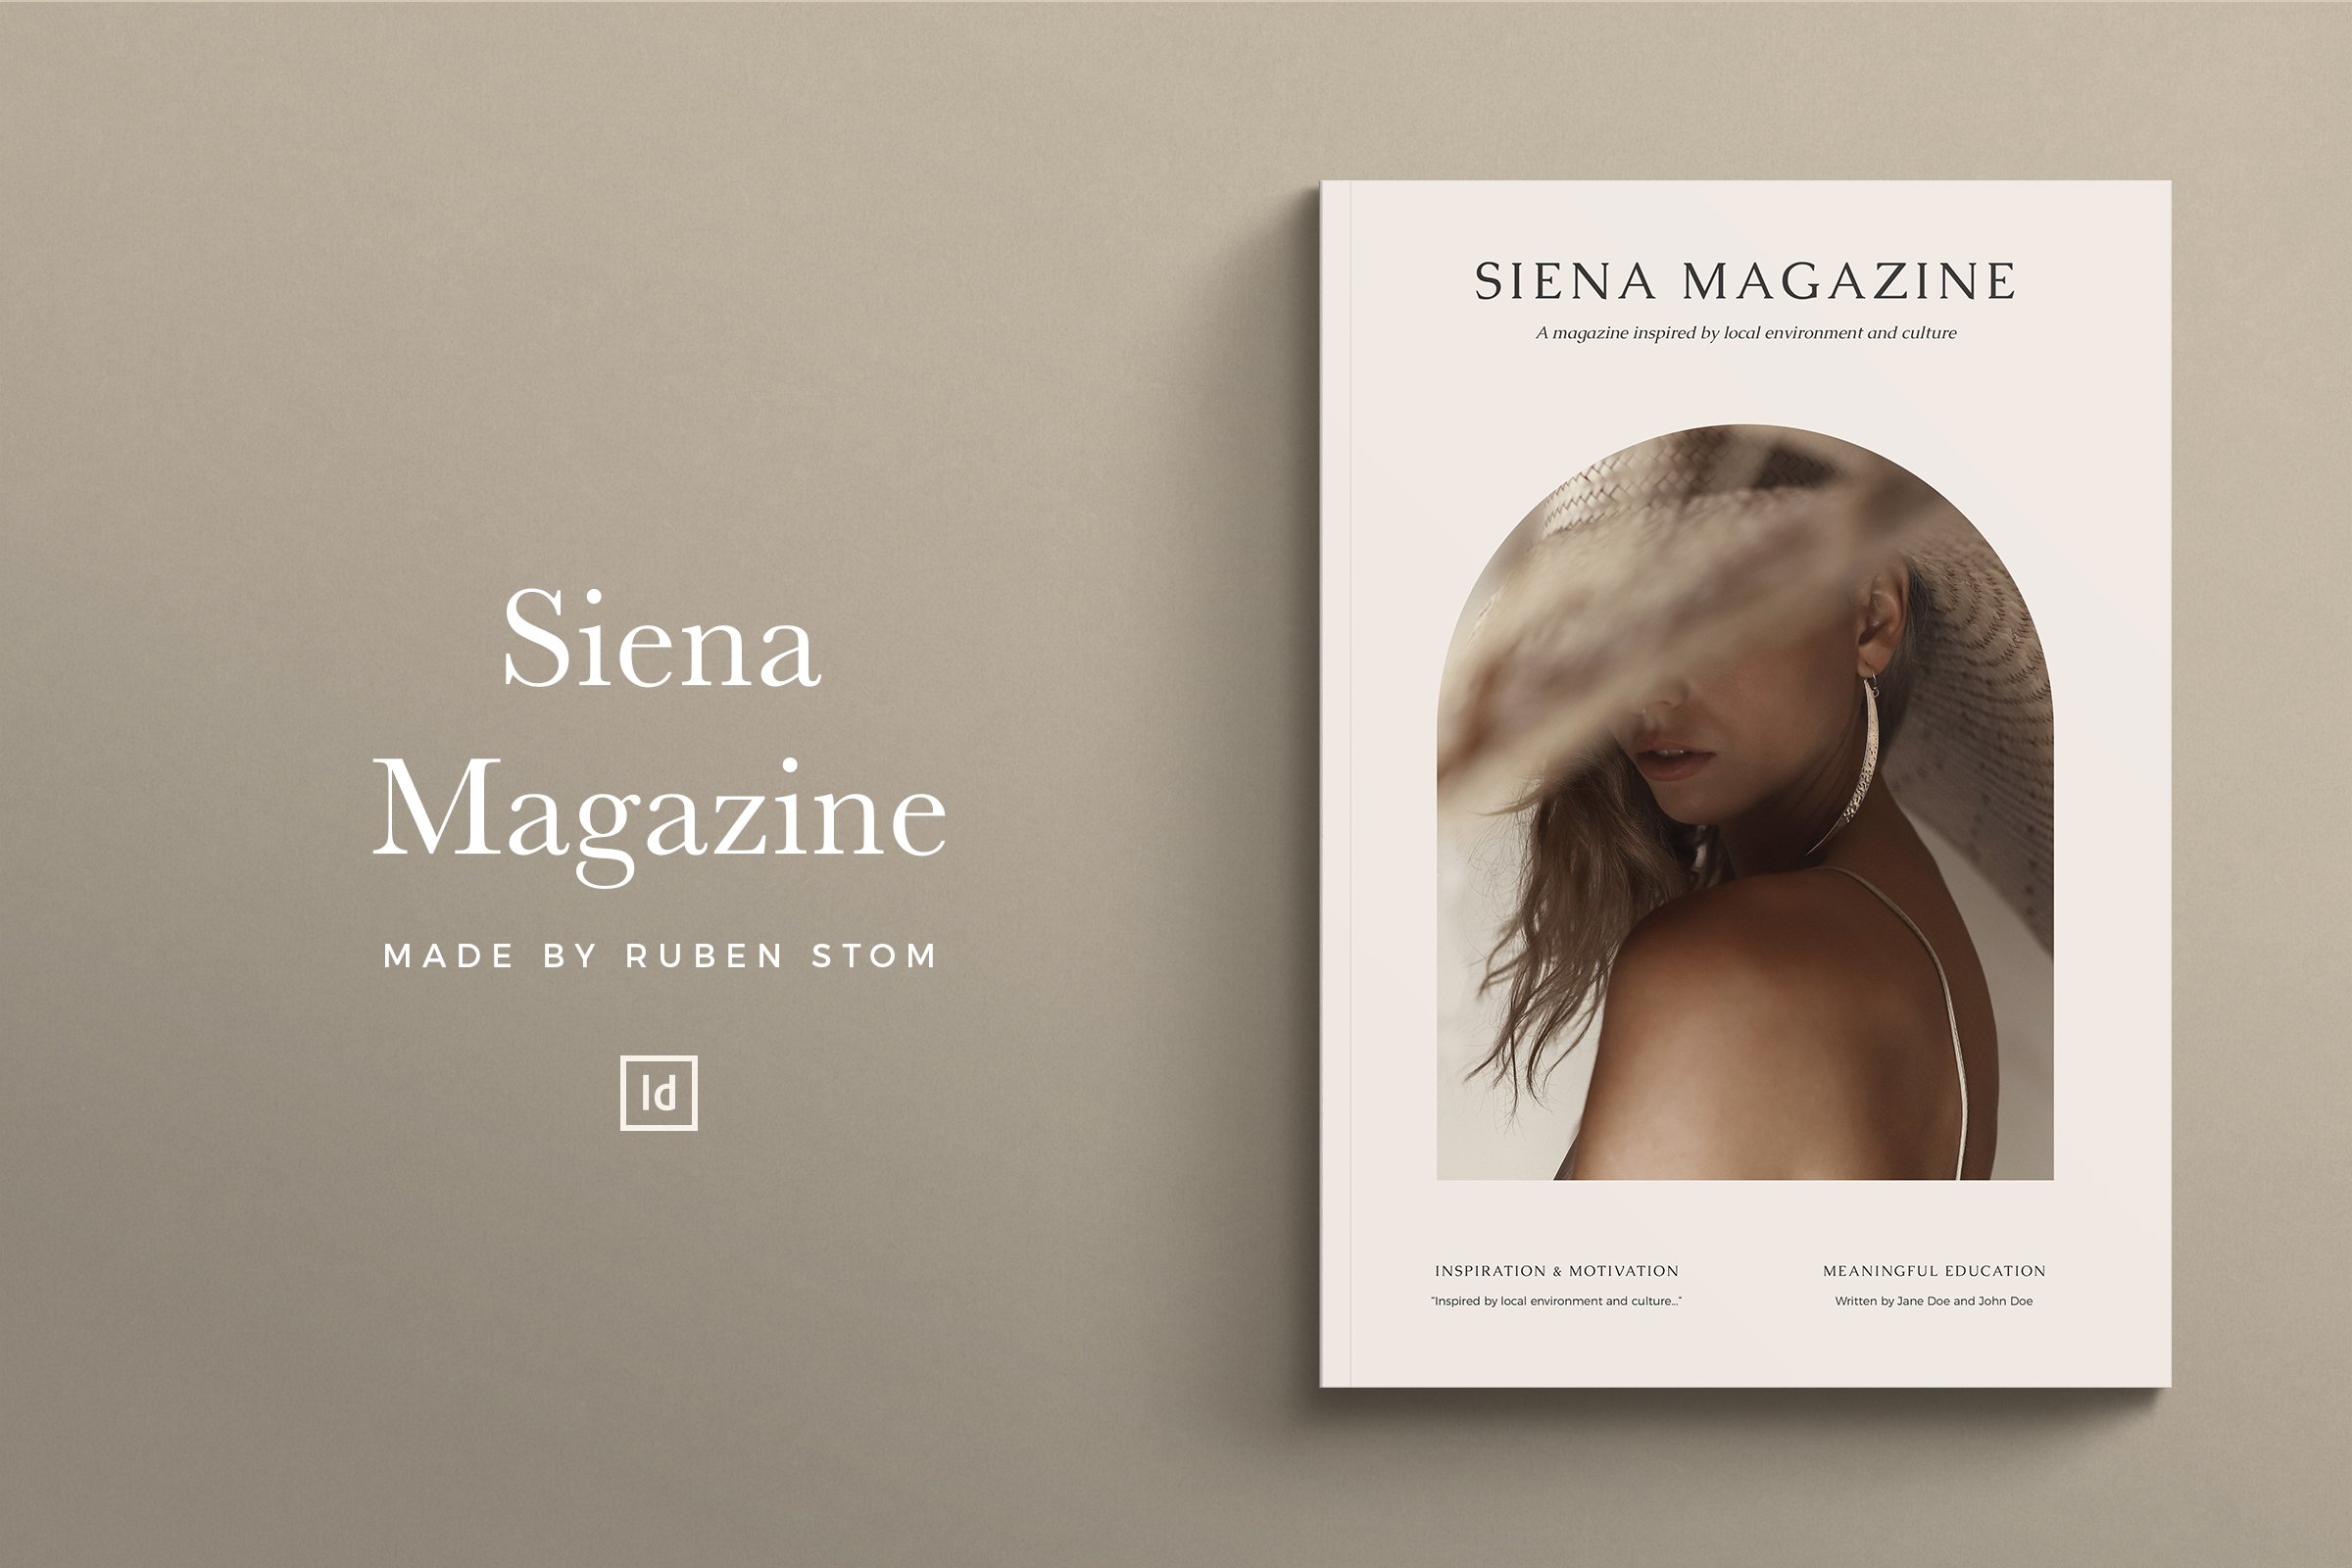 Siena Magazine cover image.